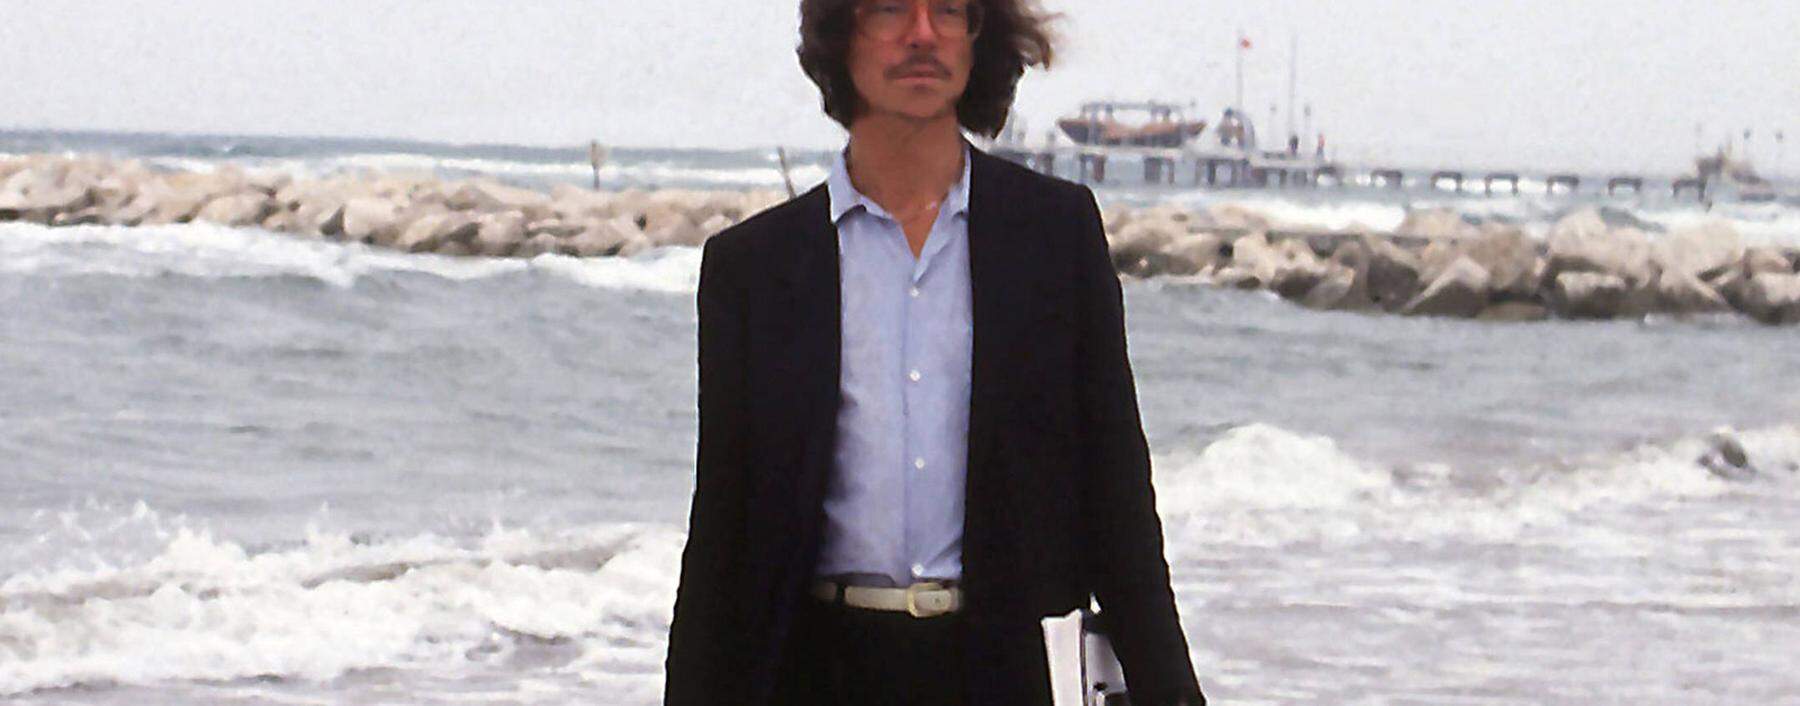 Peter Handke in Venedig, 1982.